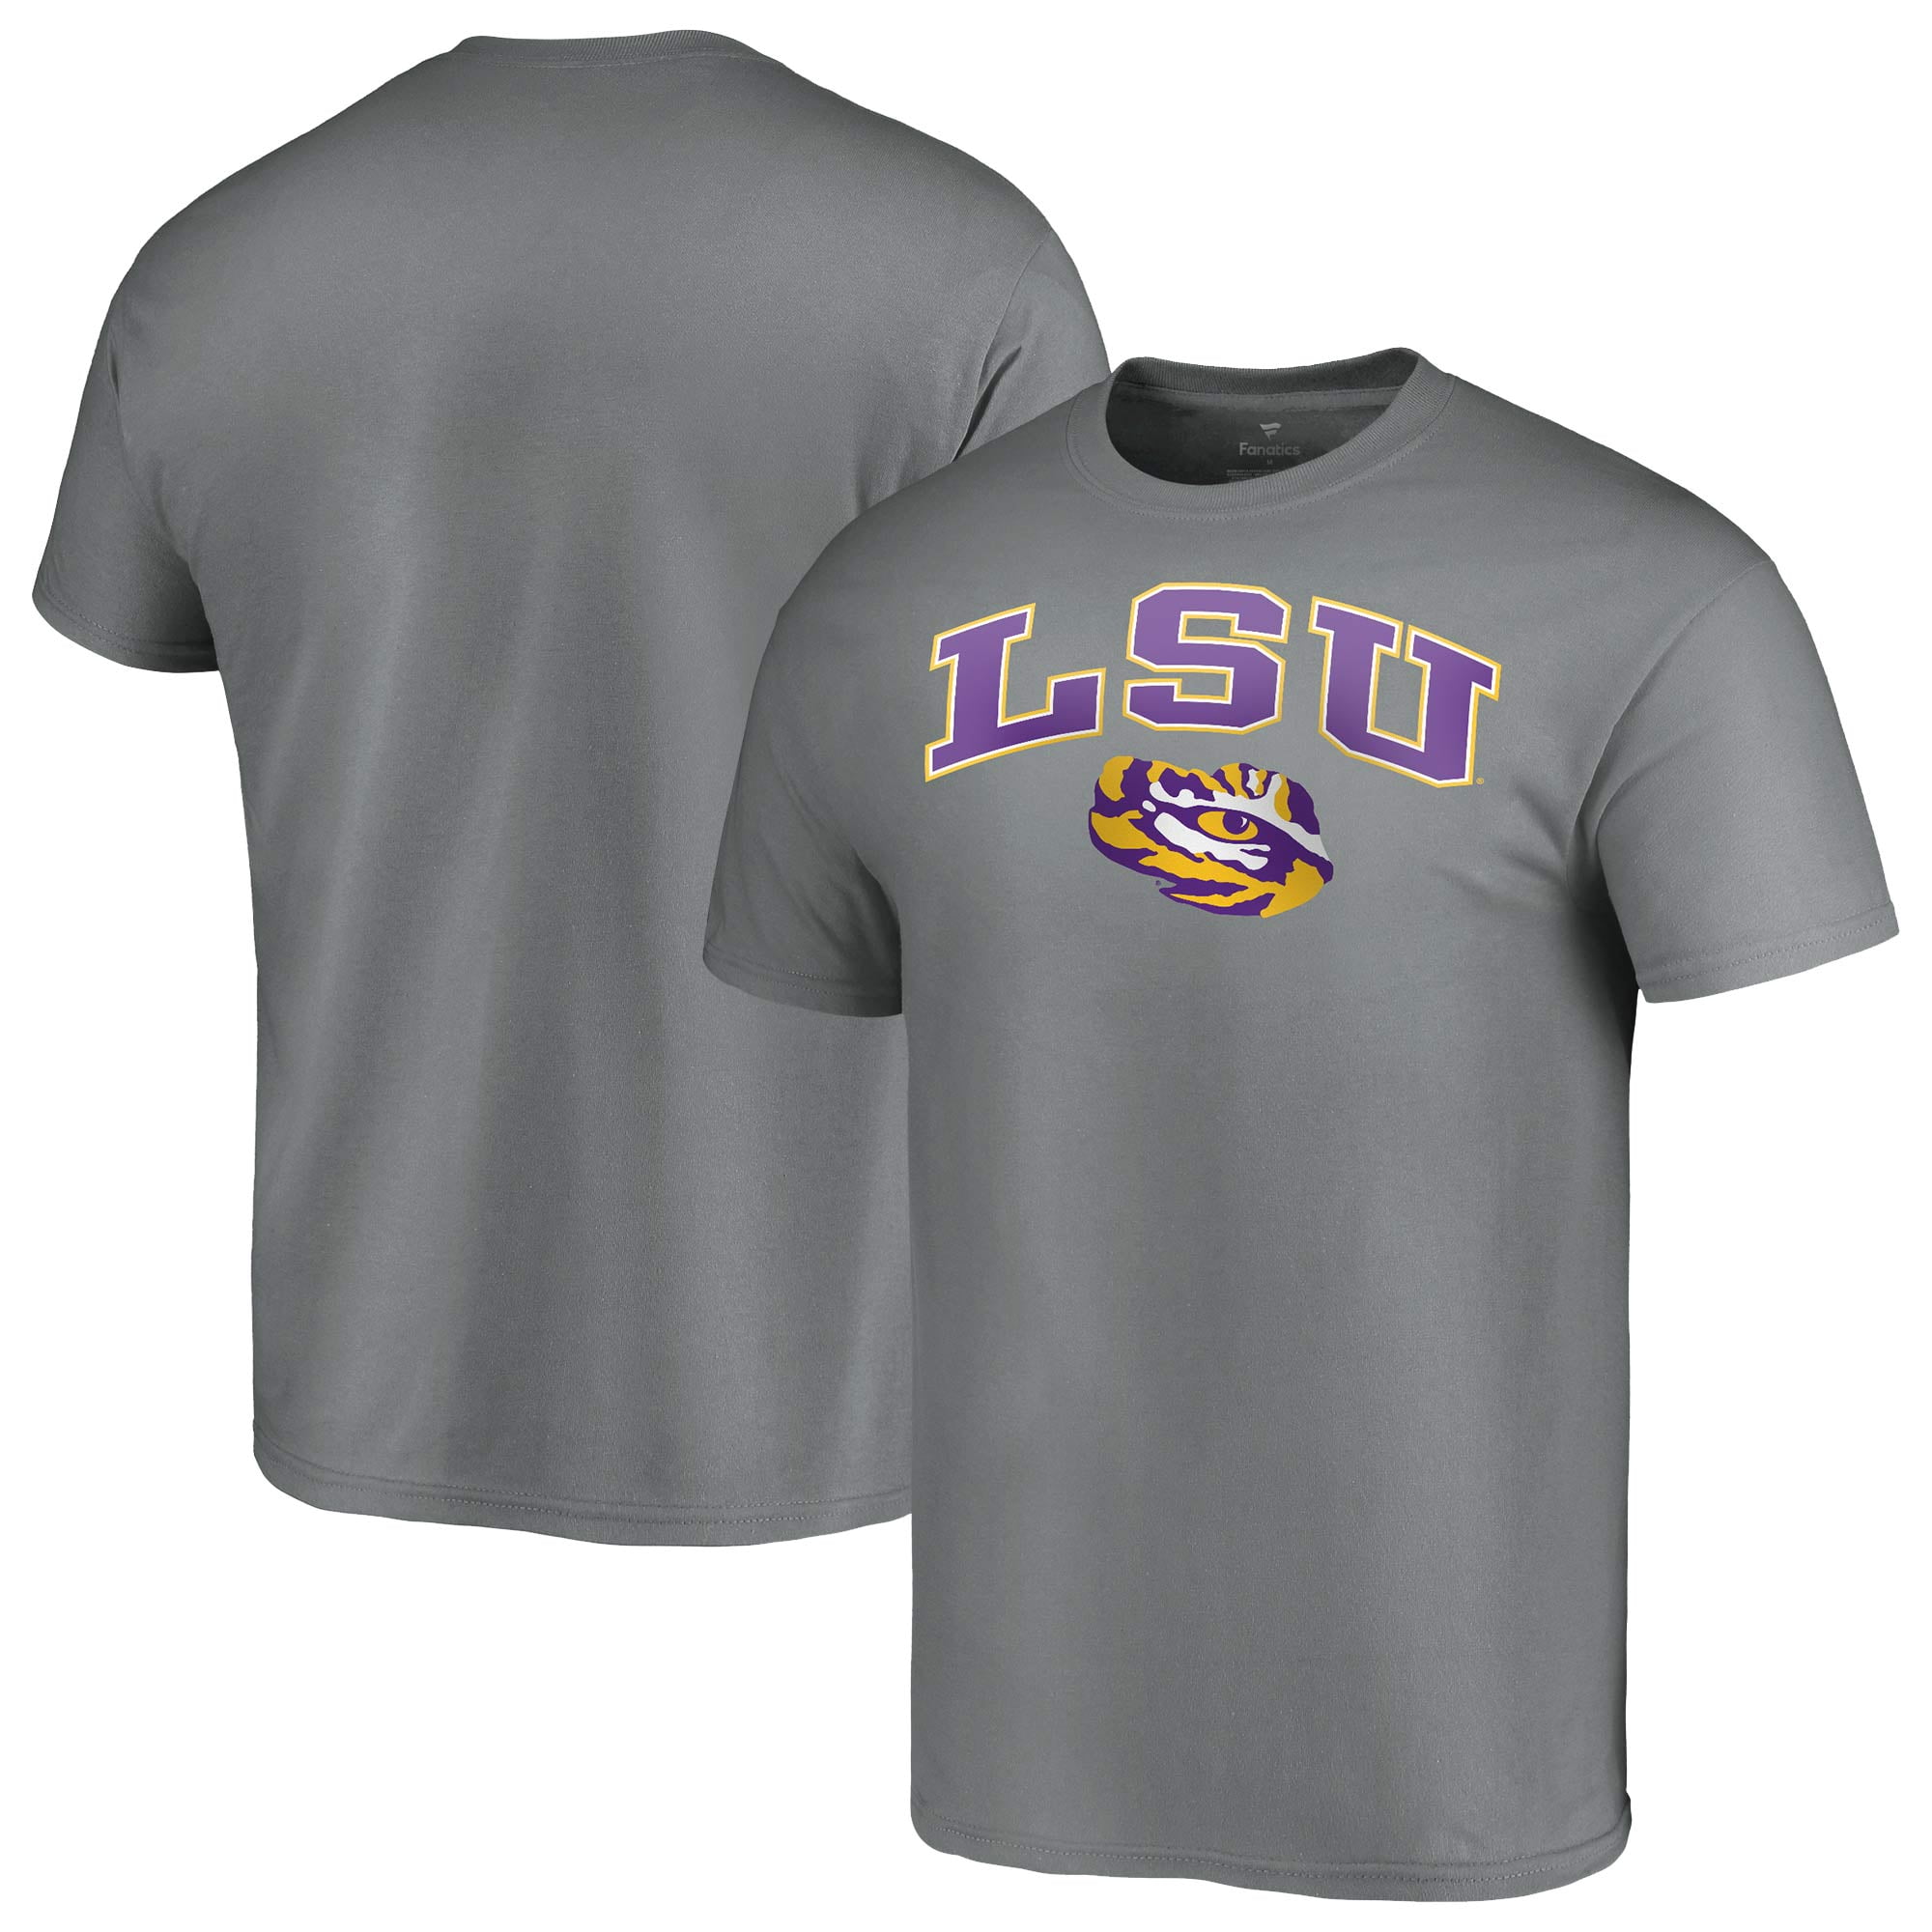 LSU Tigers Team Shop - Walmart.com